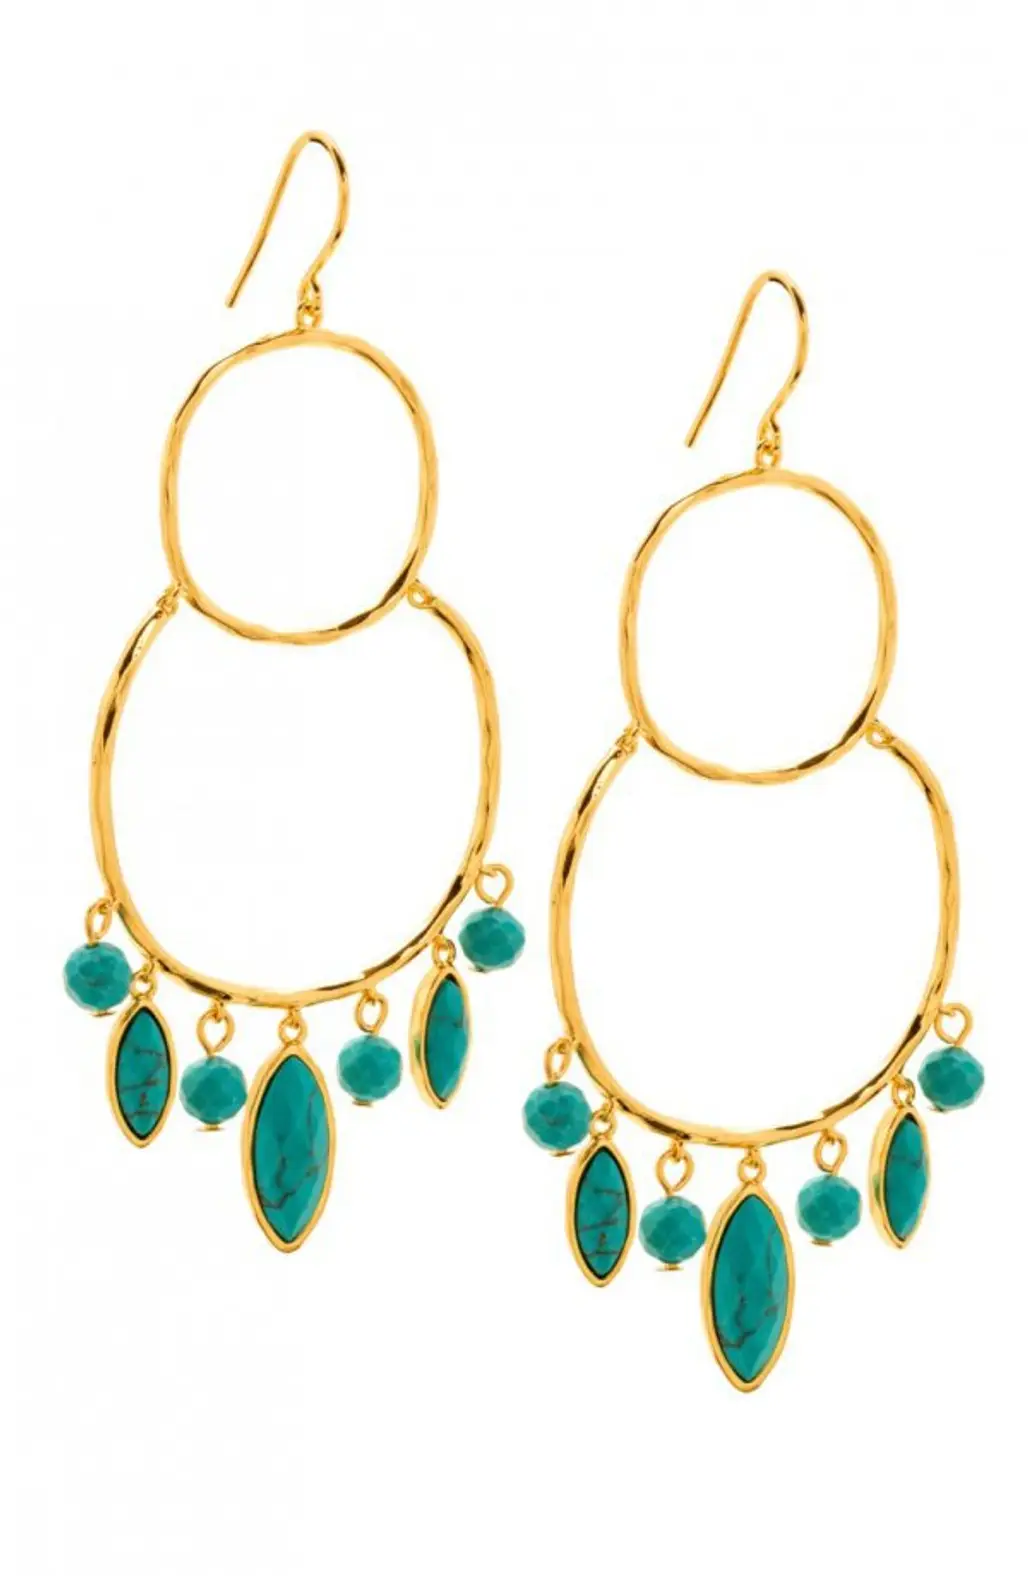 earrings, jewellery, fashion accessory, body jewelry, turquoise,